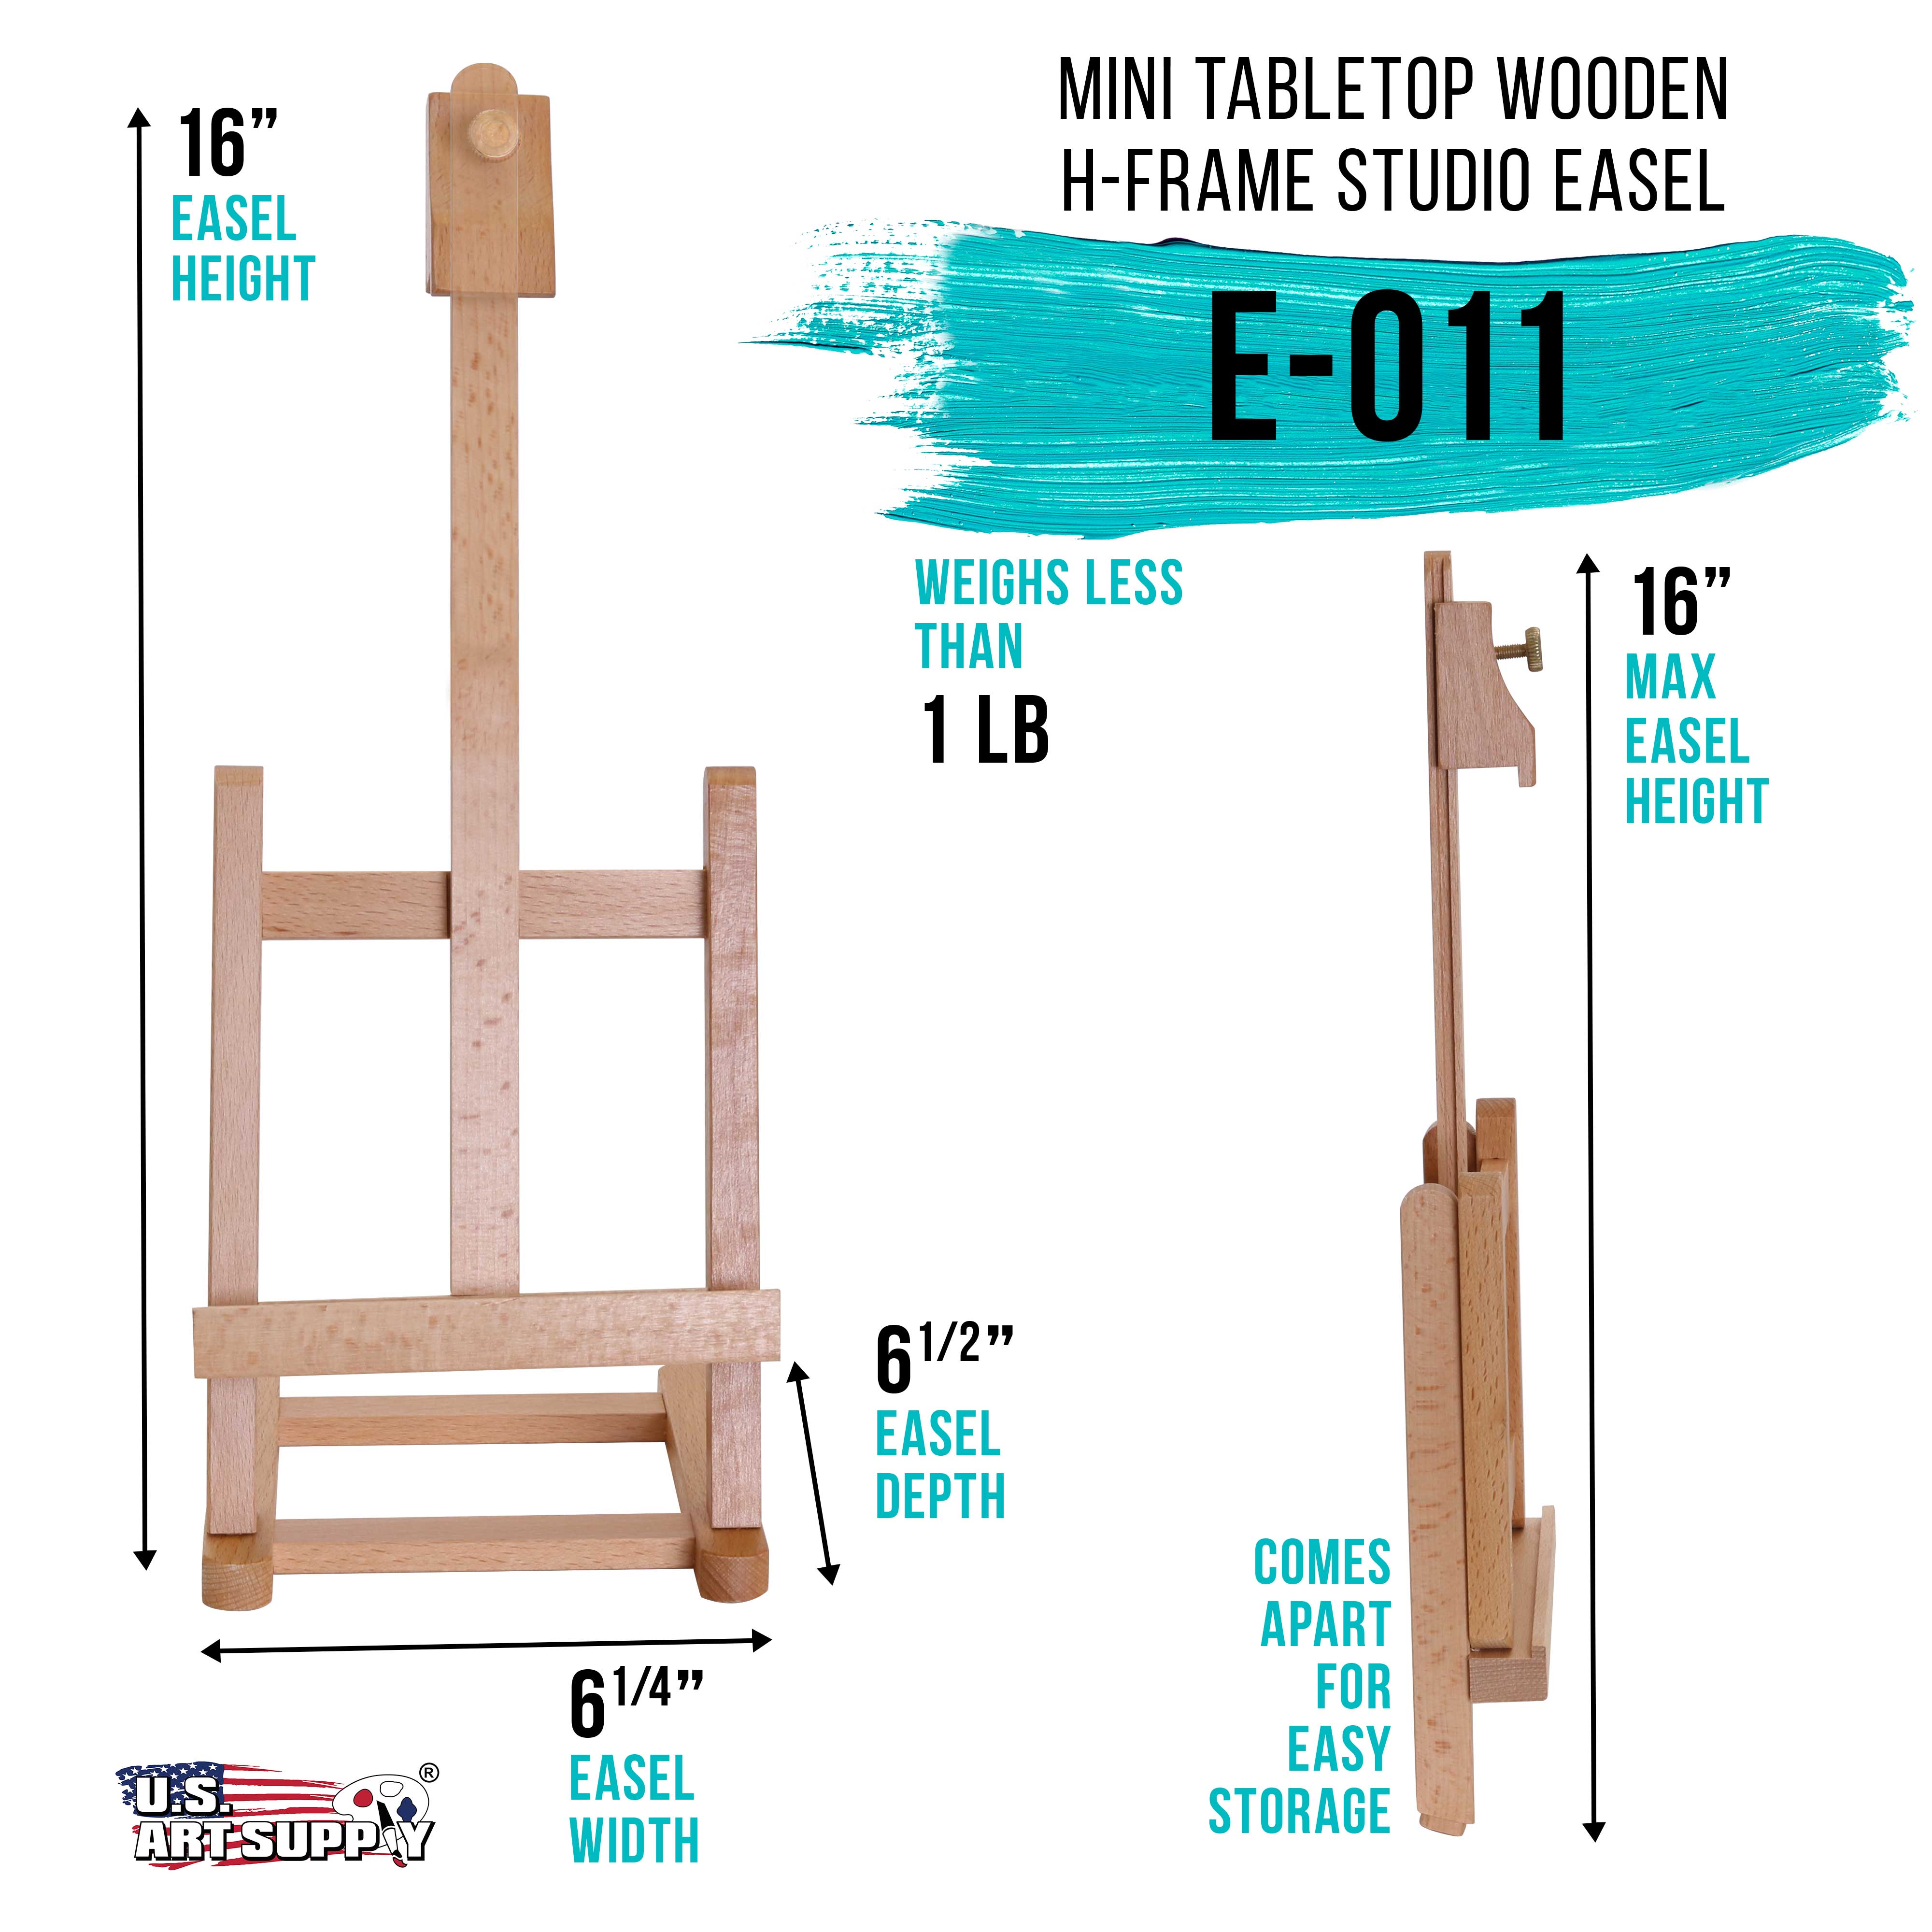 U.S. Art Supply 16" Mini Tabletop Wooden H-Frame Studio Easel - Artists Adjustable Beechwood Painting and Display Easel - image 2 of 5